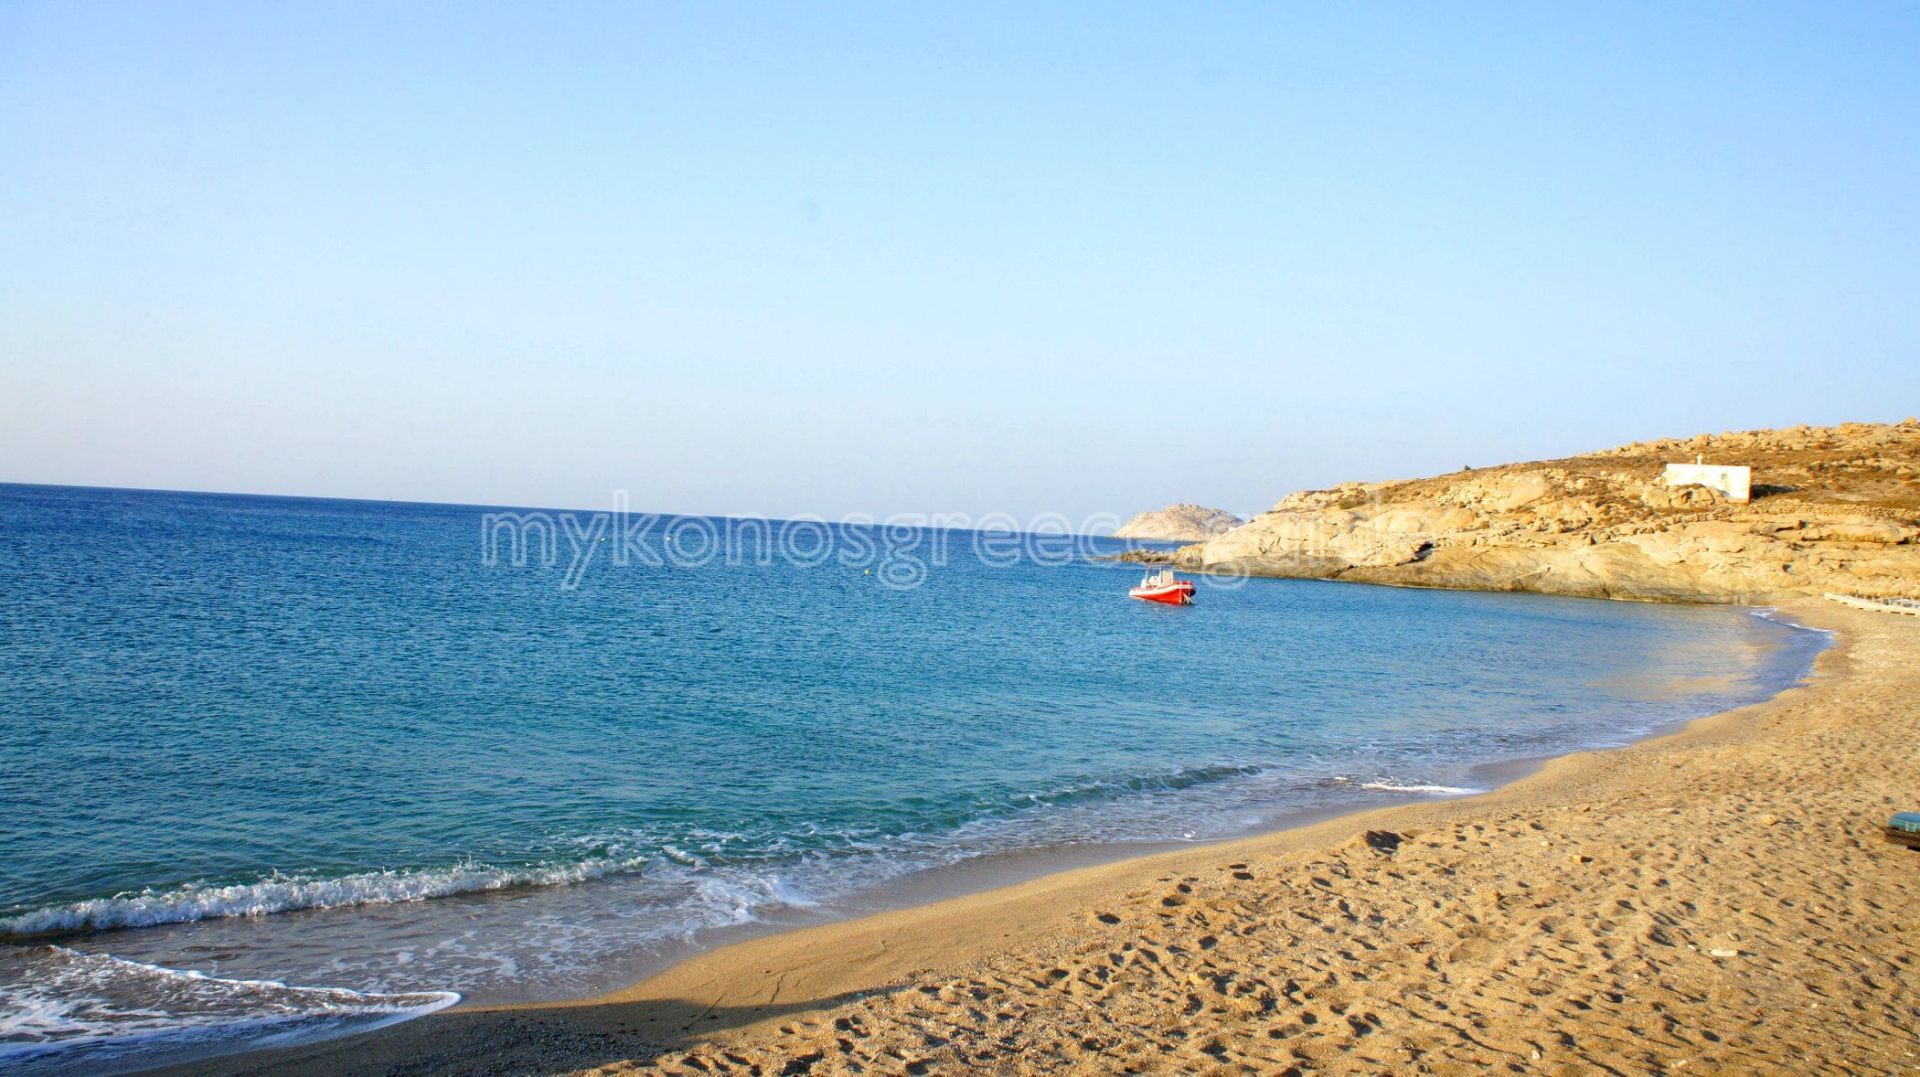 Lia beach, Mykonos beaches | Mykonos Greece Guide